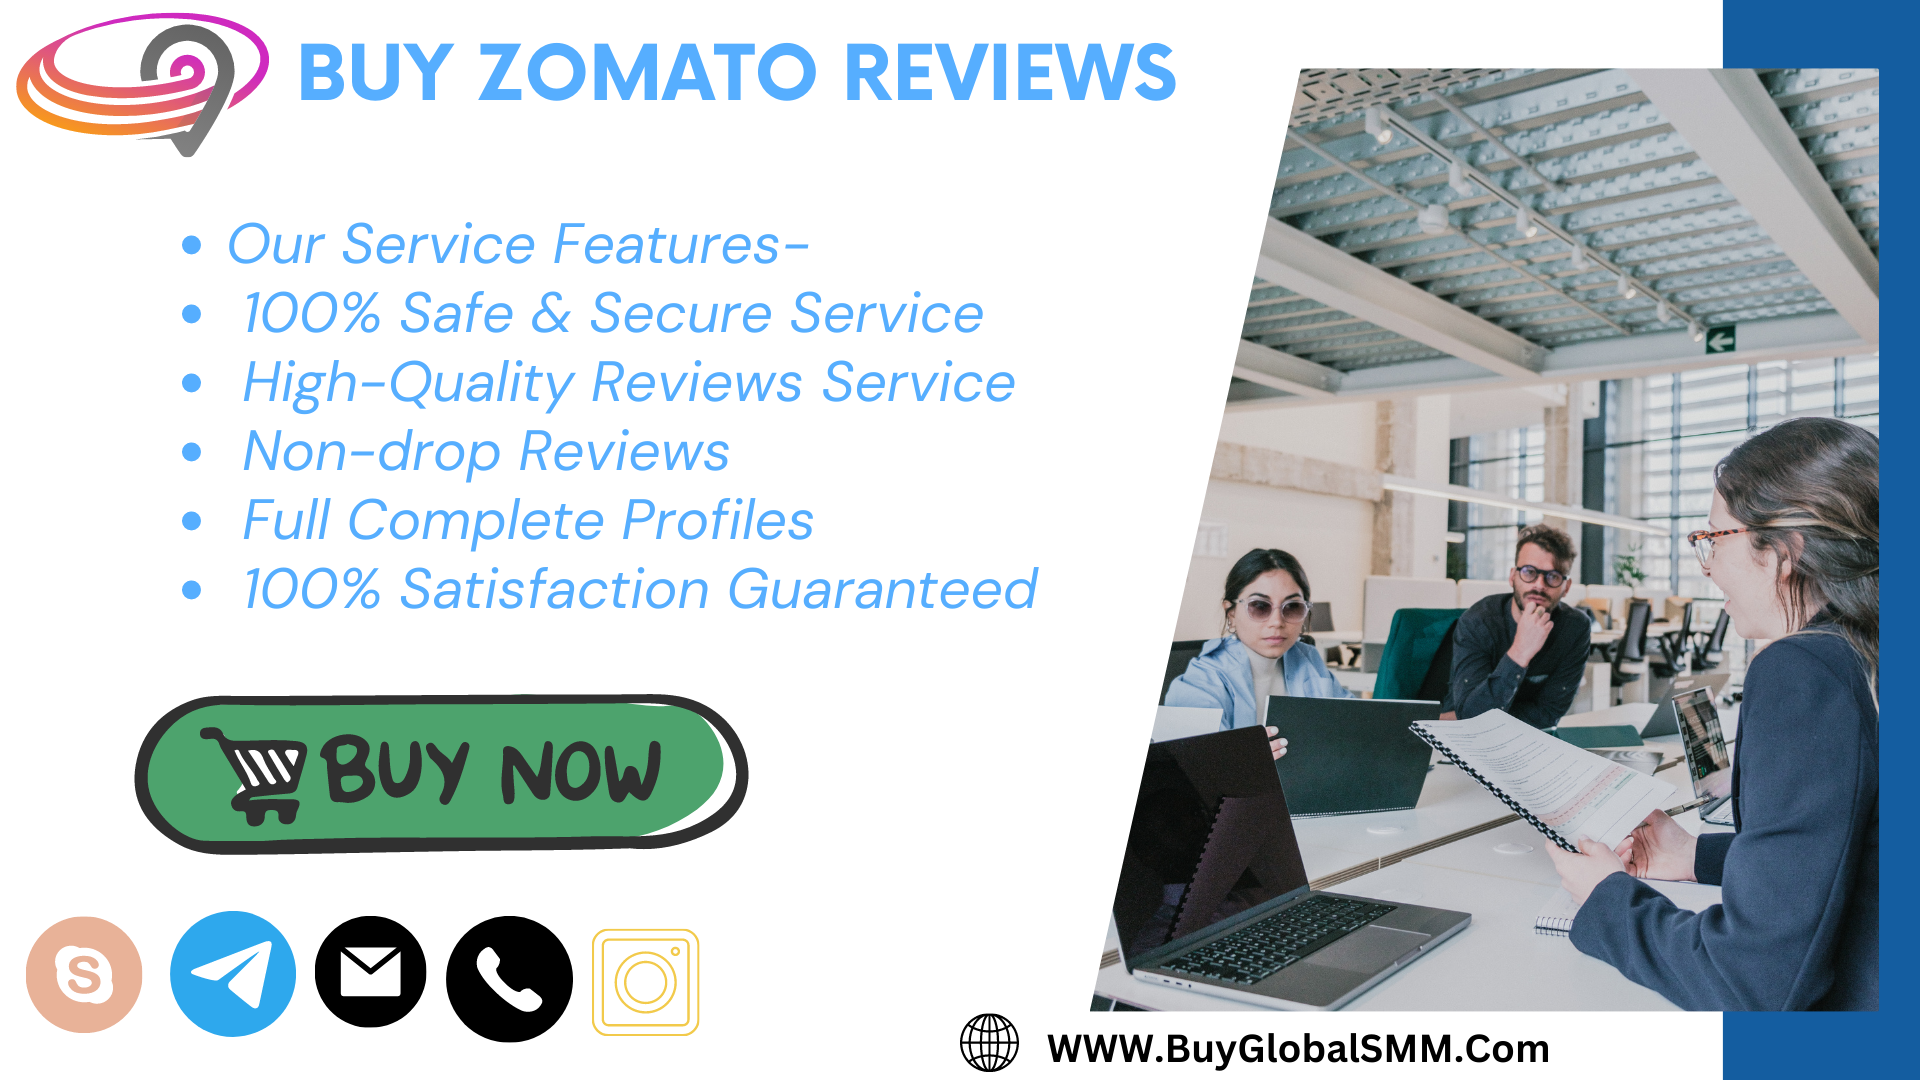 Buy Zomato Reviews 